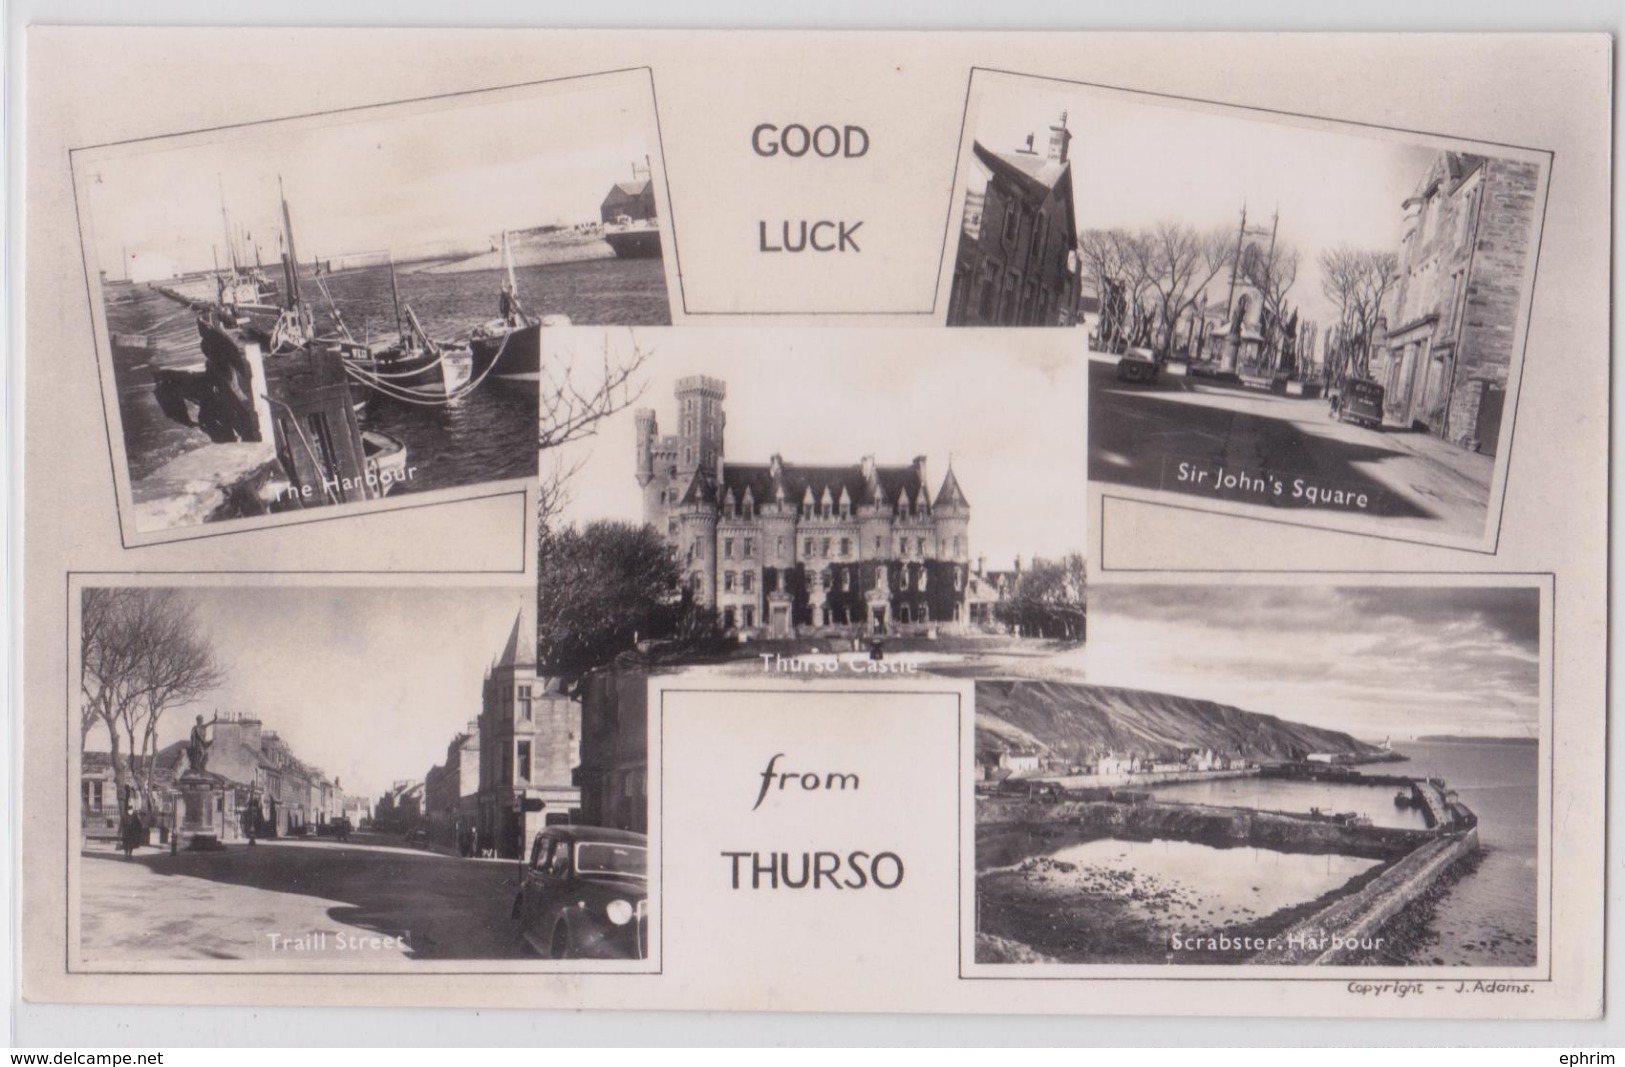 Good Luck From THURSO (Scotland) - Traill Street - Multiview - Caithness